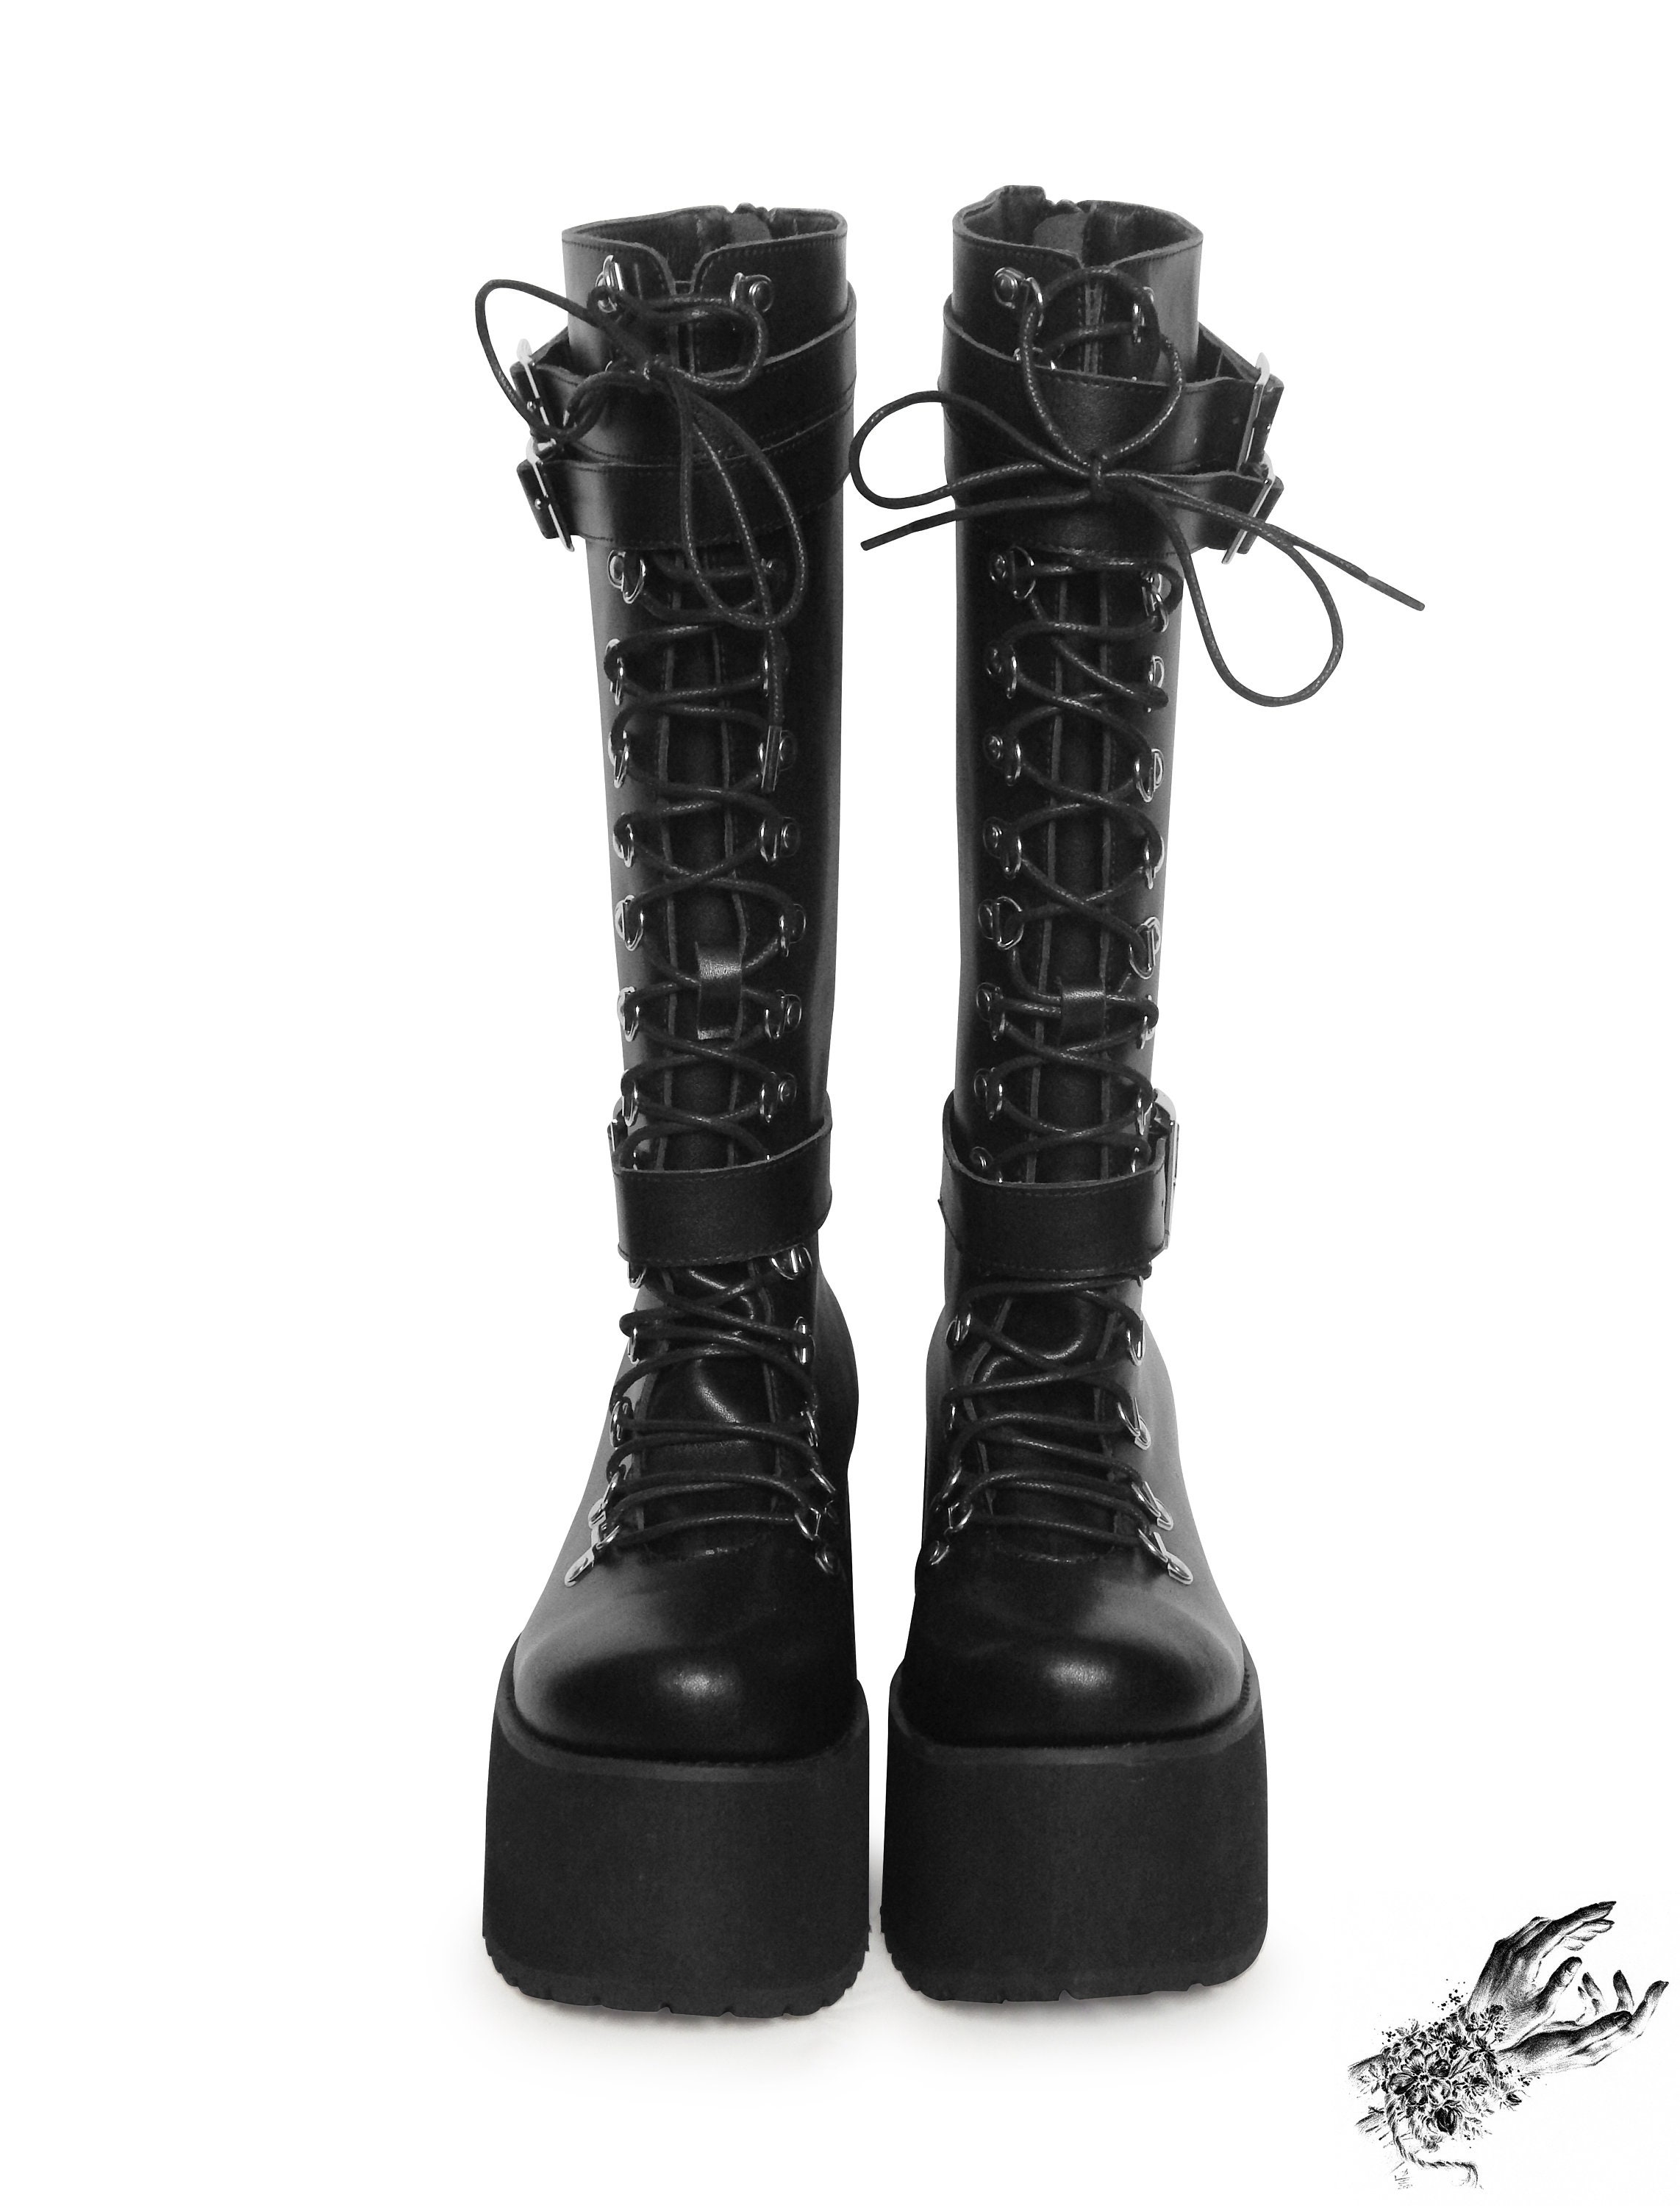 Black Matte Leather Knee High Platform Boots, "Lexa" Gothic Platform Boots, Real Leather, Vegan Leather, Large Sizes, Custom Gothic Boots photo